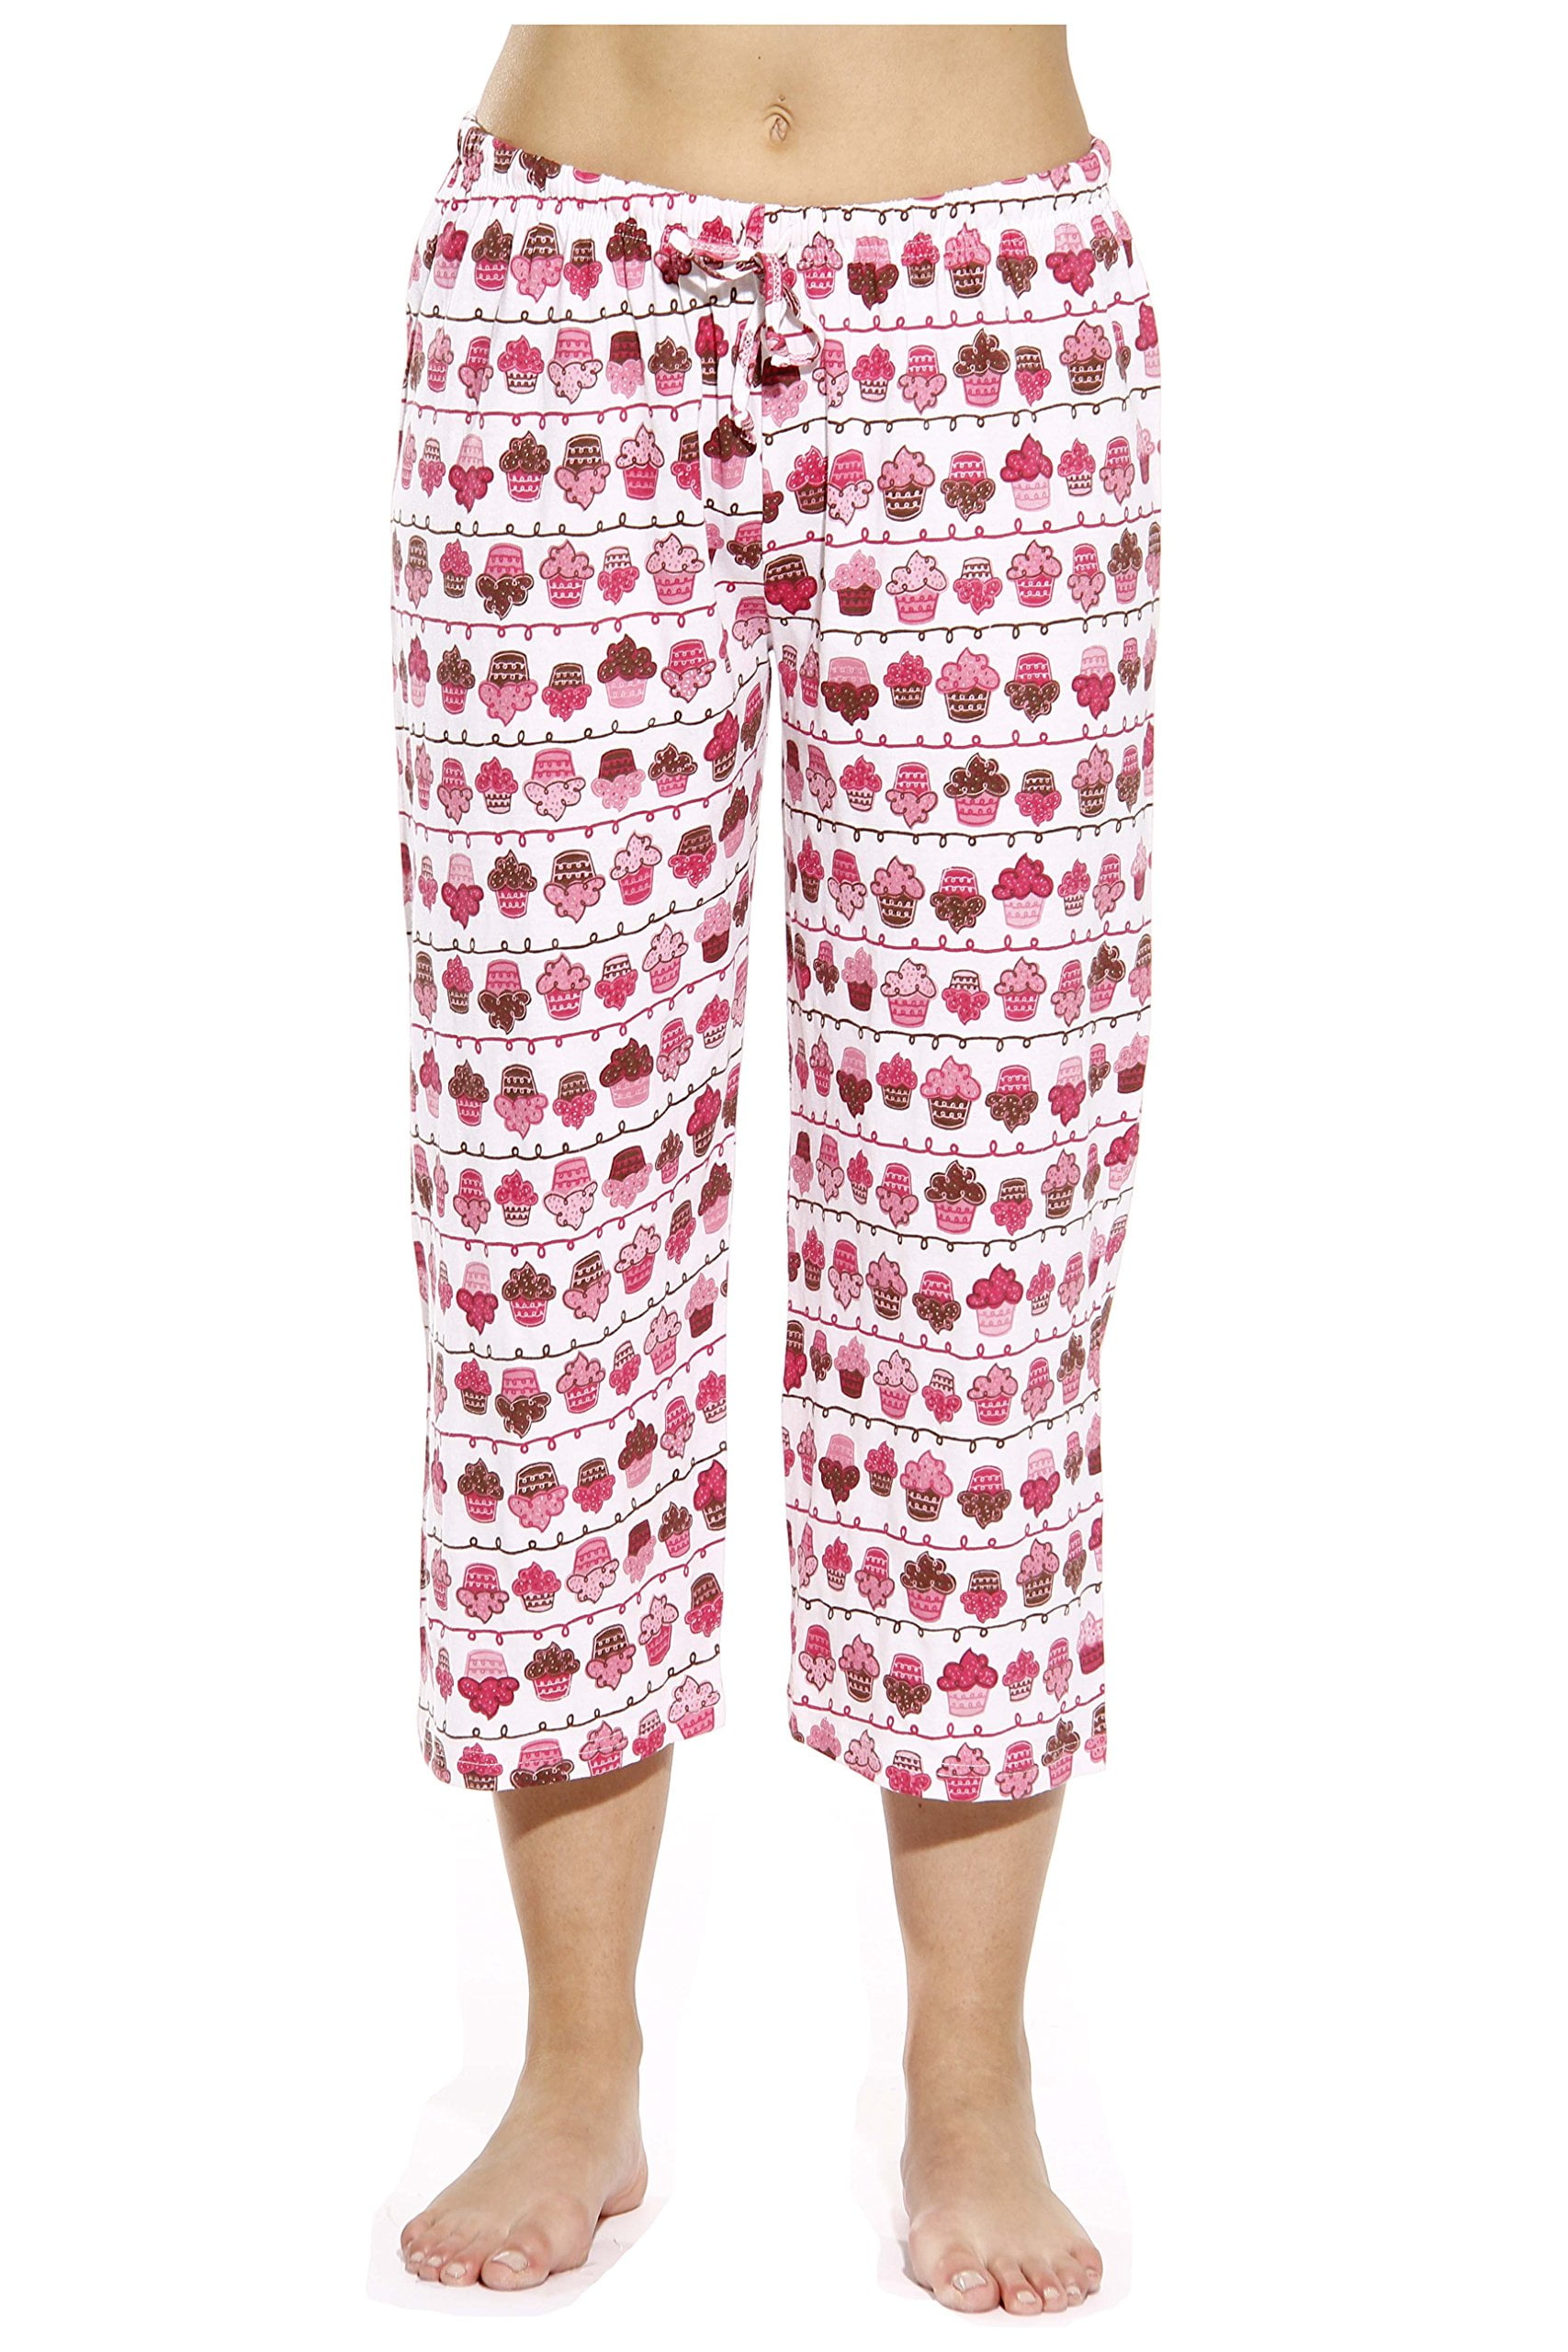 Just Love 100% Cotton Women's Capri Pajama Pants Sleepwear - Comfortable  and Stylish (Cupcake - White, Small)